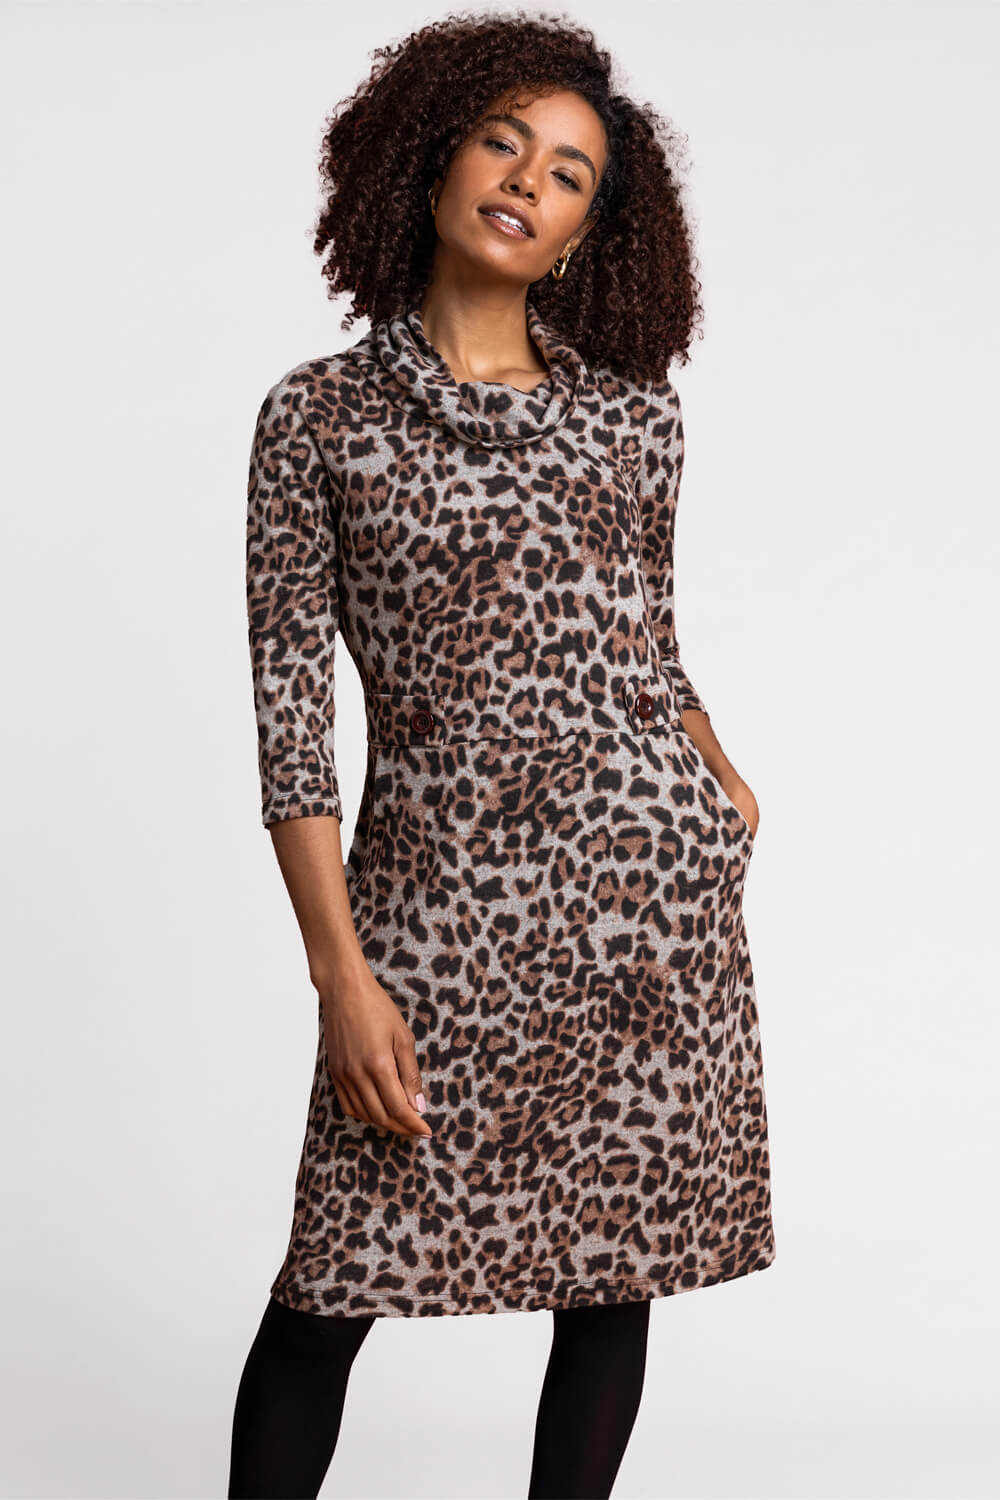 Leopard Print Cowl Neck Dress